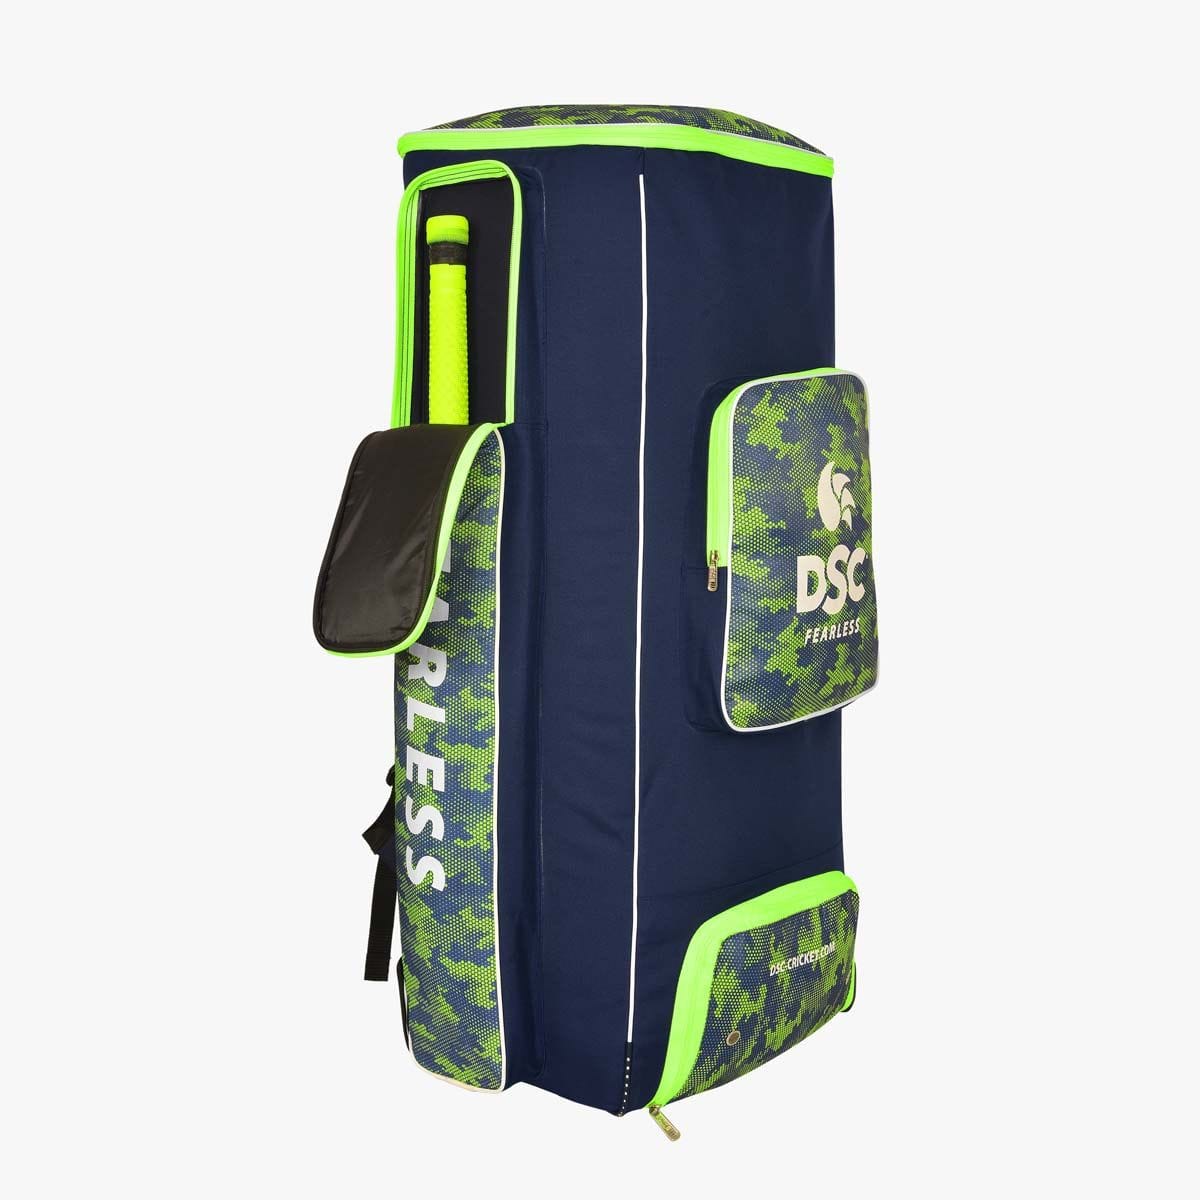 Adidas Cricket Bags DSC Valence Camo Ace Wheels Cricket Bag